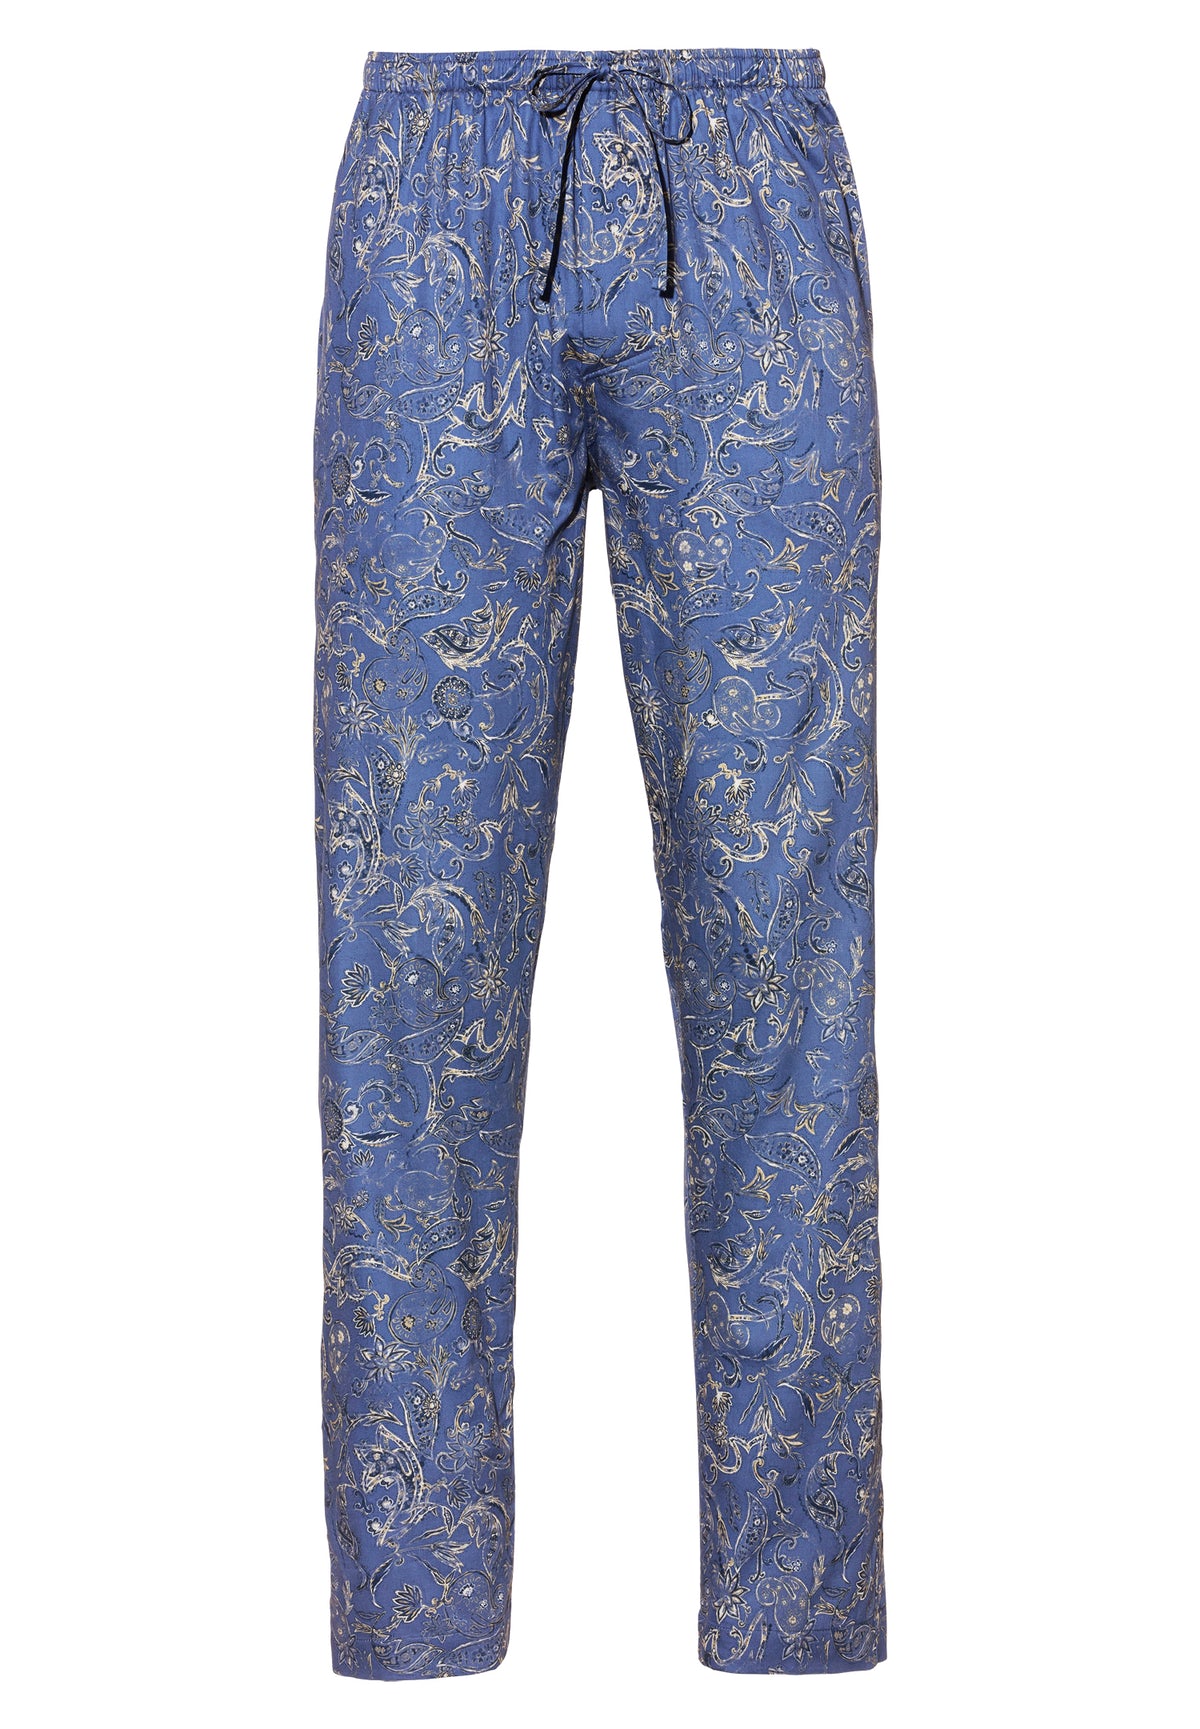 Cotton Sateen Print | Pants Long - summer-paisley blue